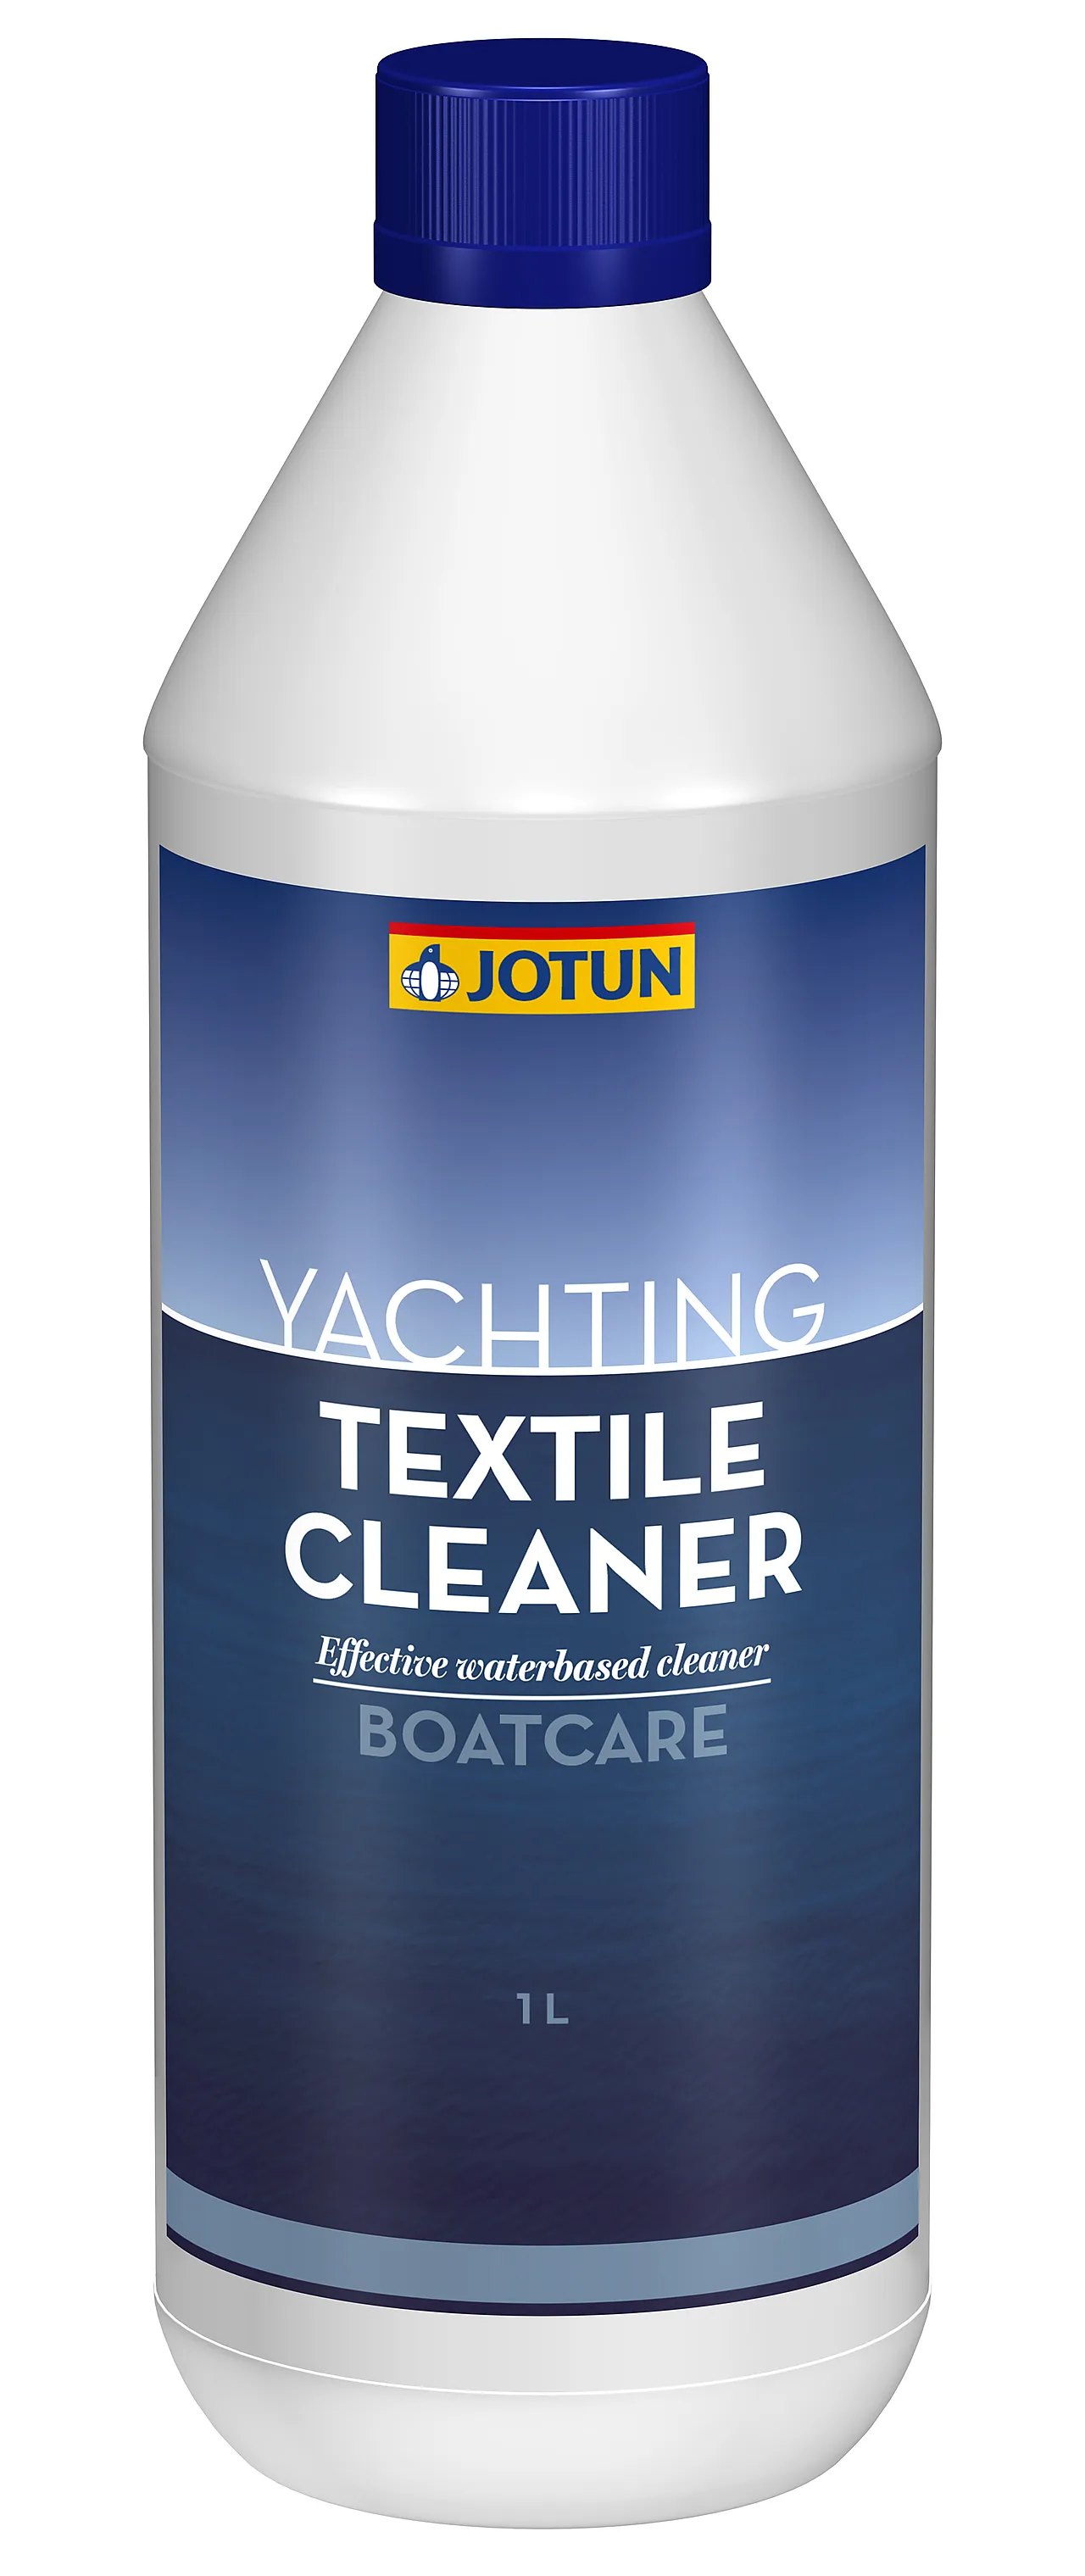 Textile cleaner 1l